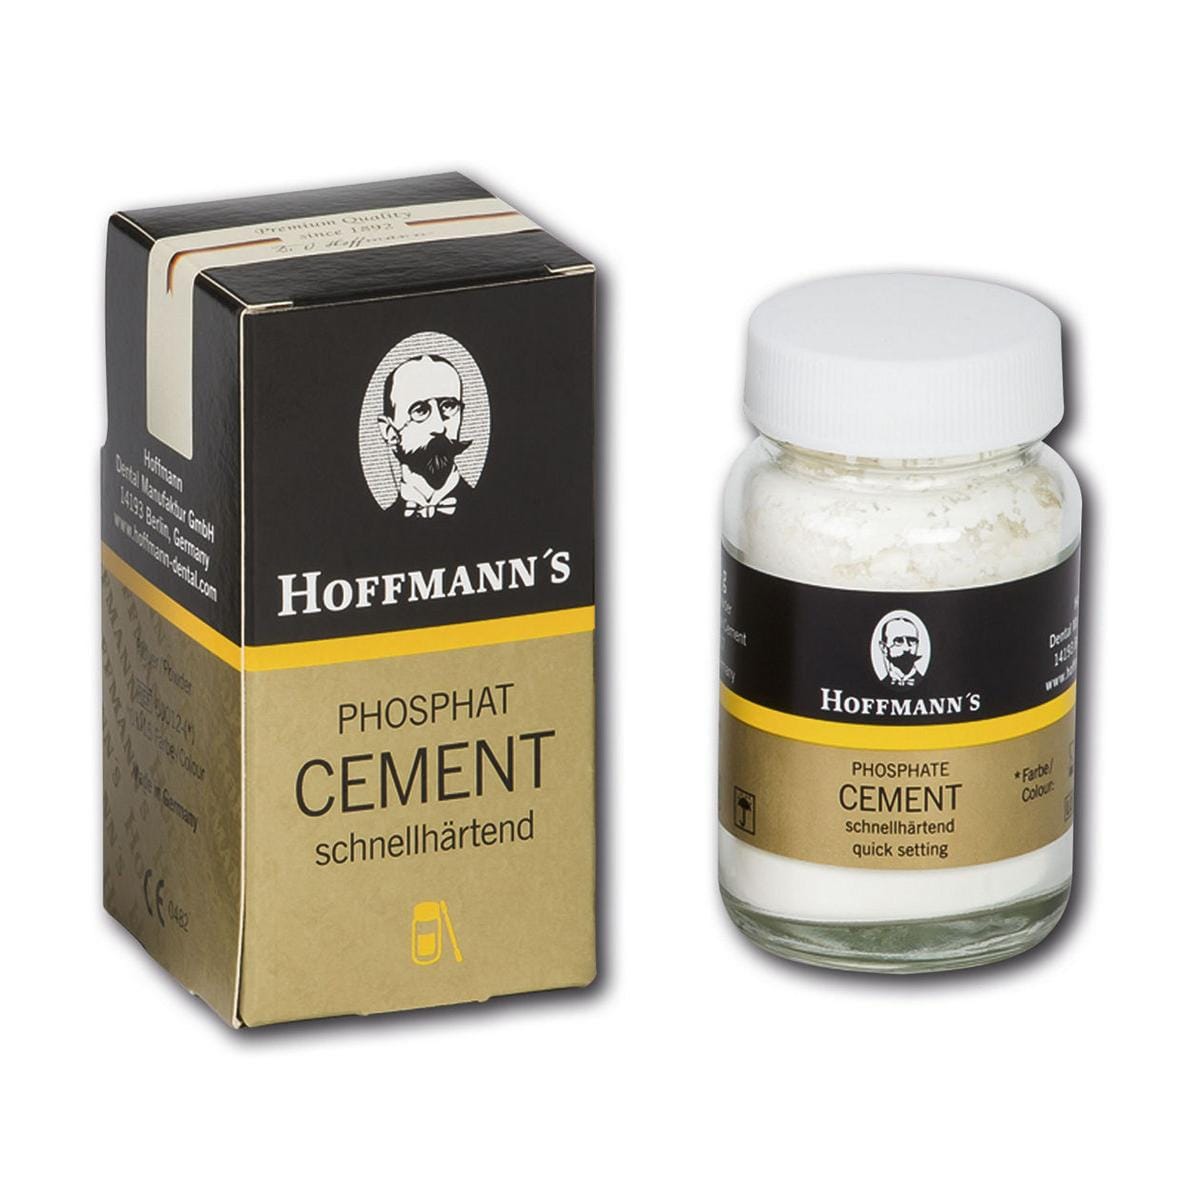 Hoffmans phosphate ciment - poudre 100 g - N 4 - jaune clair